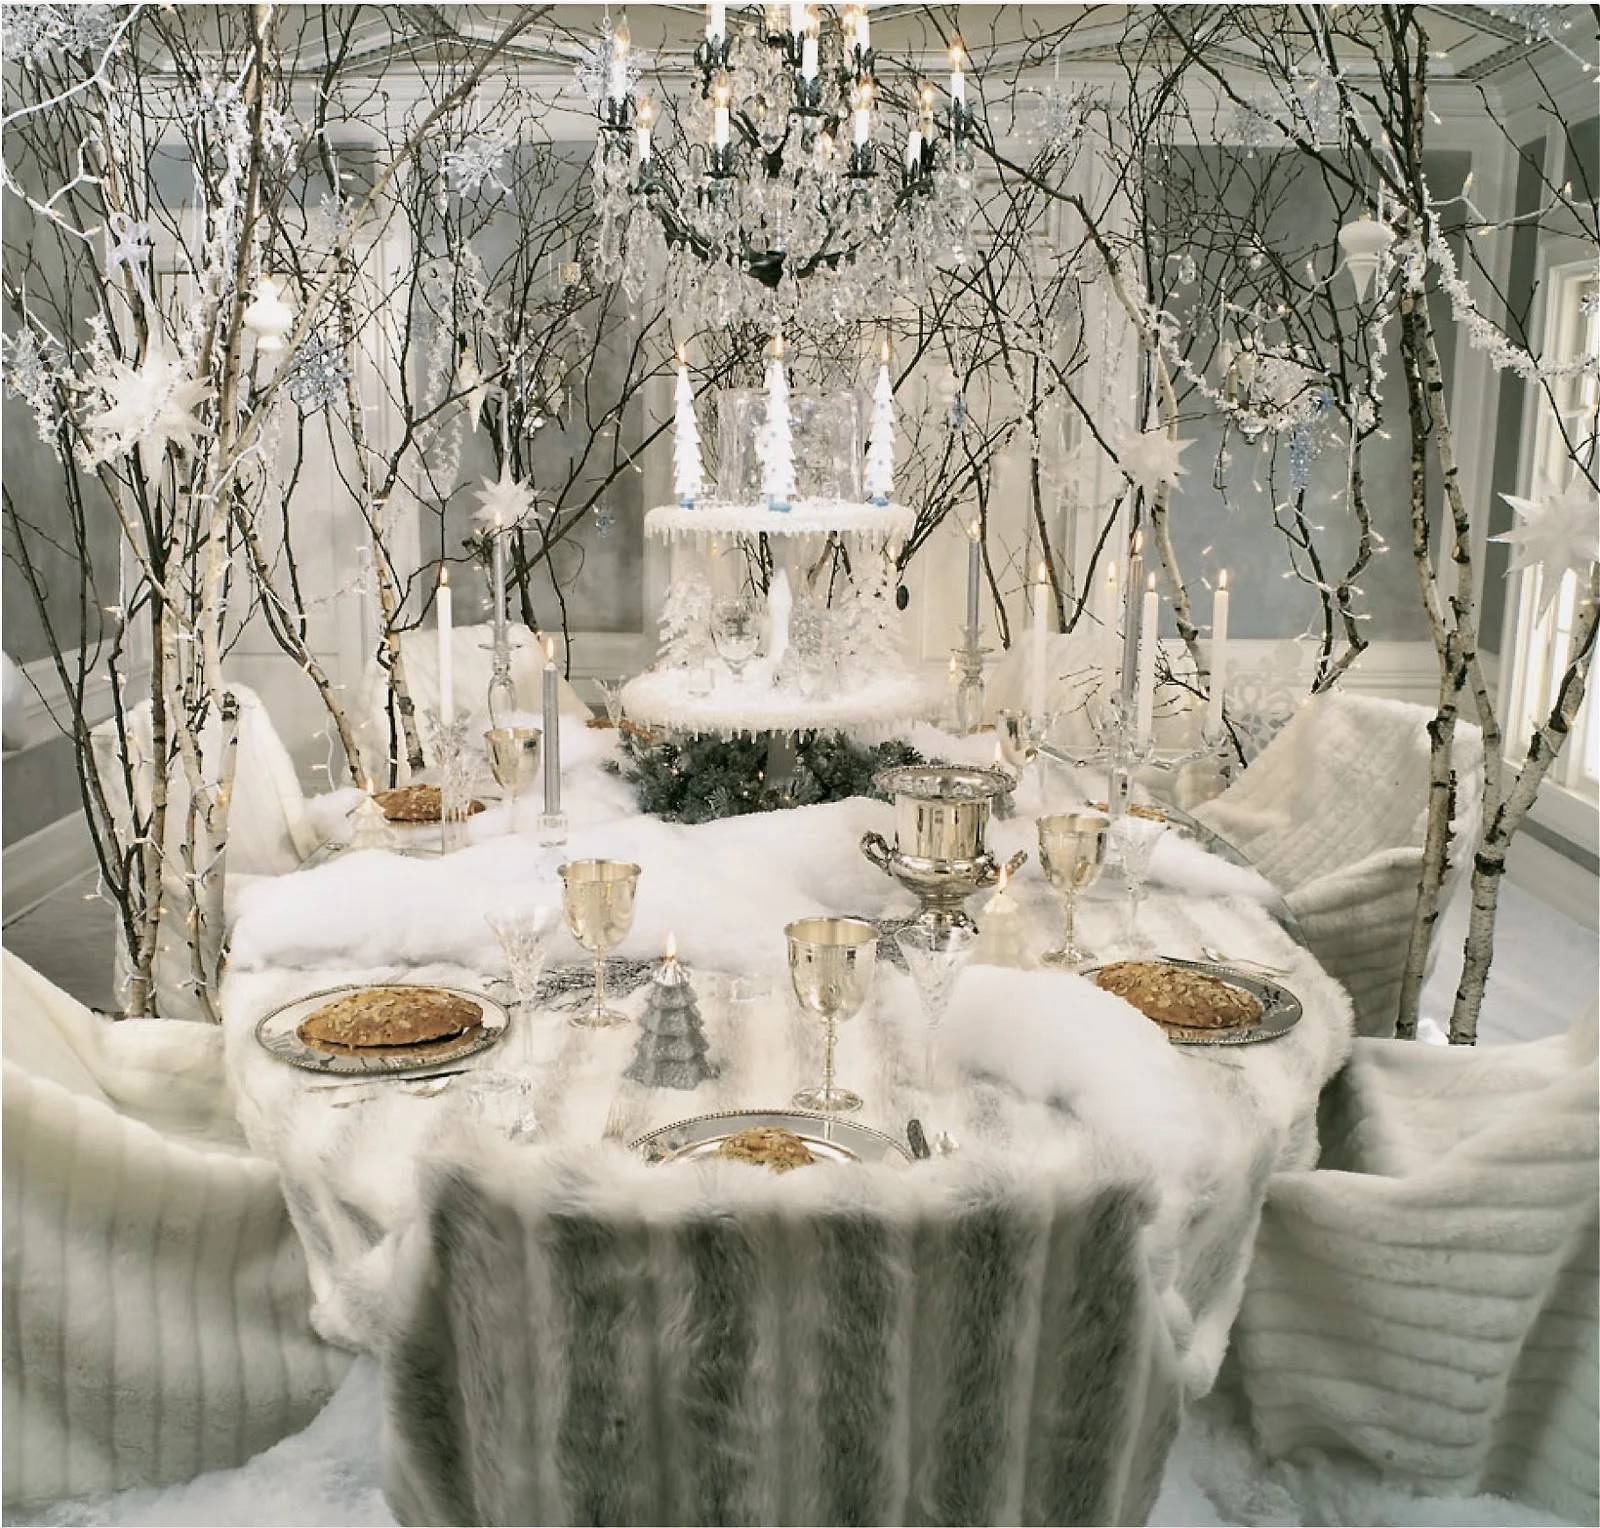 Tap into the Season with a Winter Wonderland Theme Setup